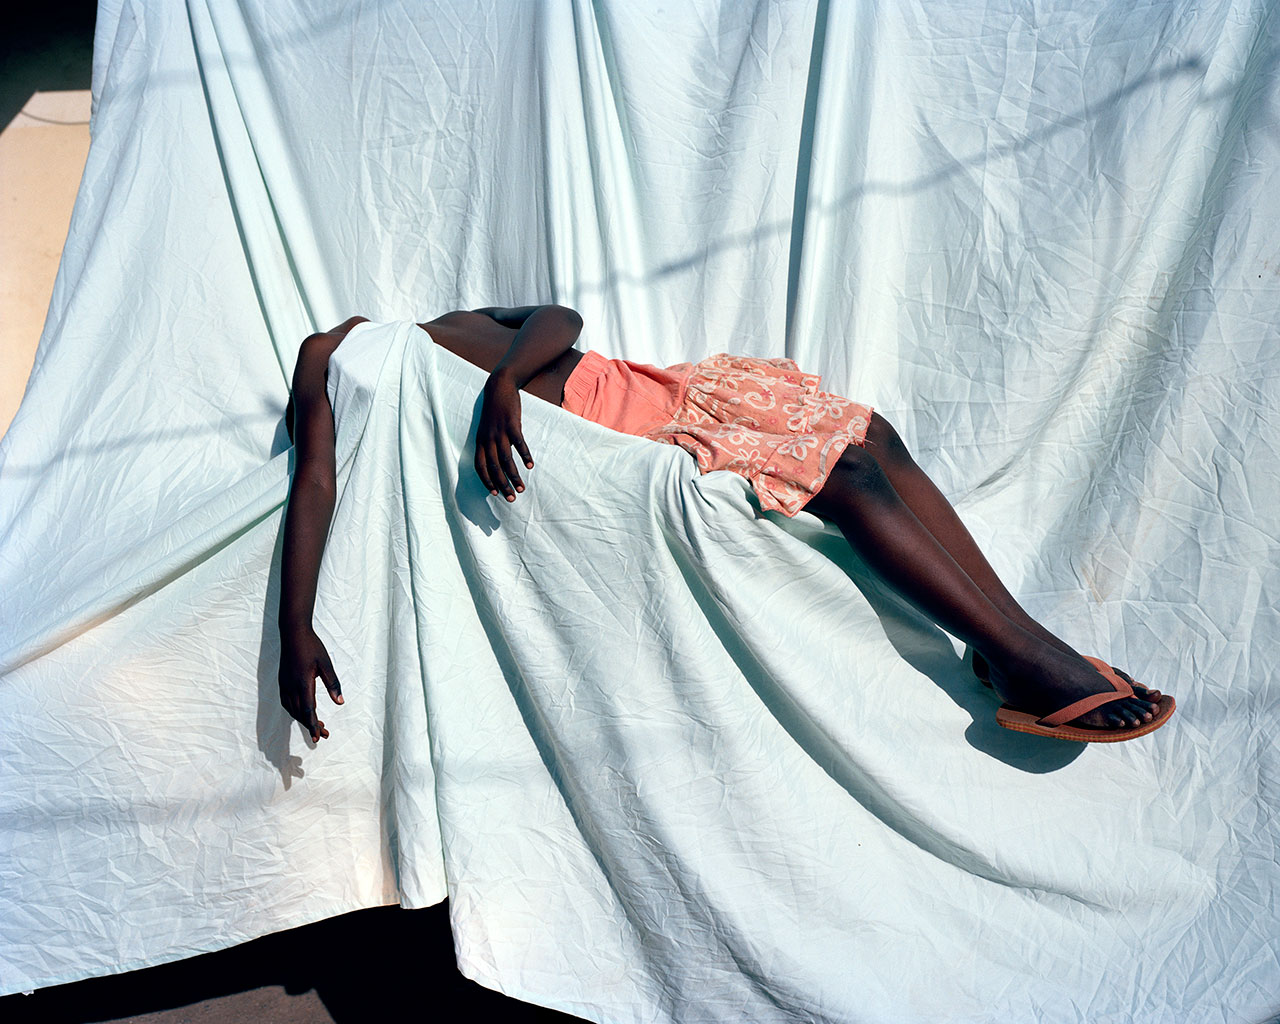  Parasomnia, AFRICA, photo © Viviane Sassen